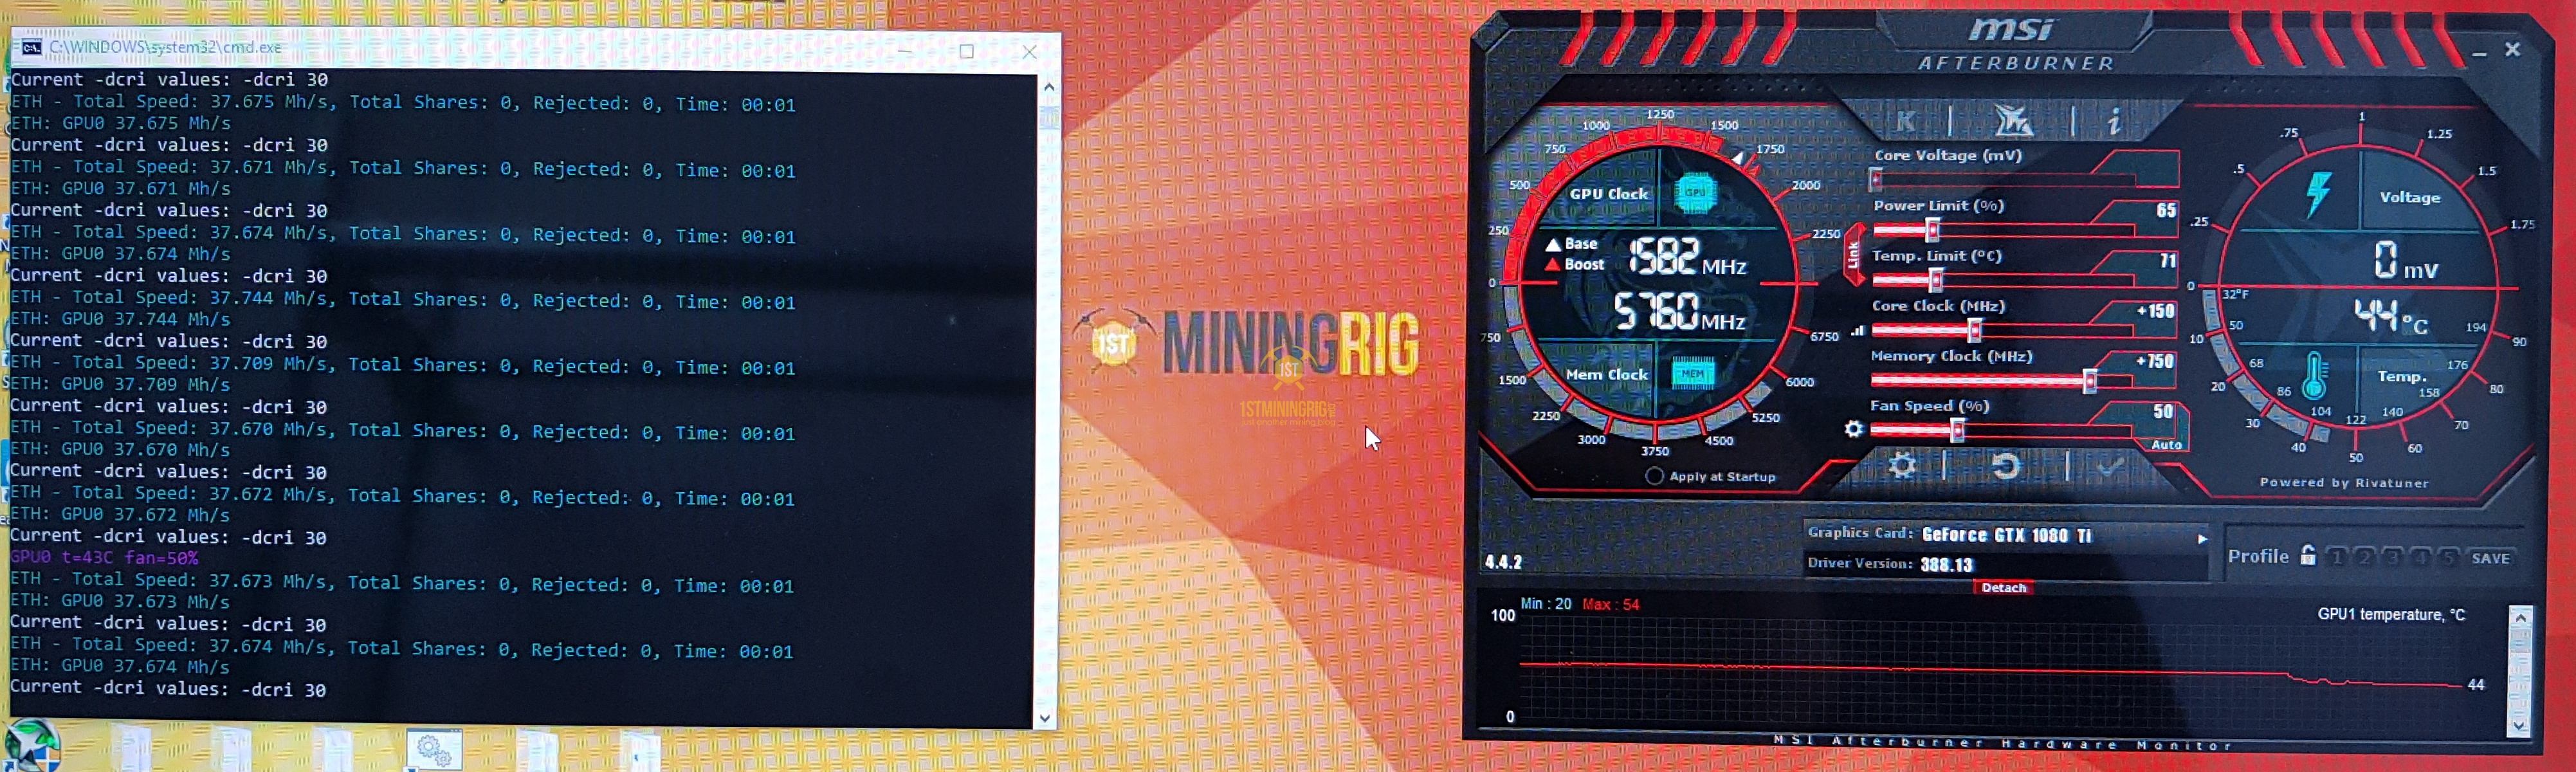 Mining with NVIDIA GeForce GTX Ti - BetterHash Calculator